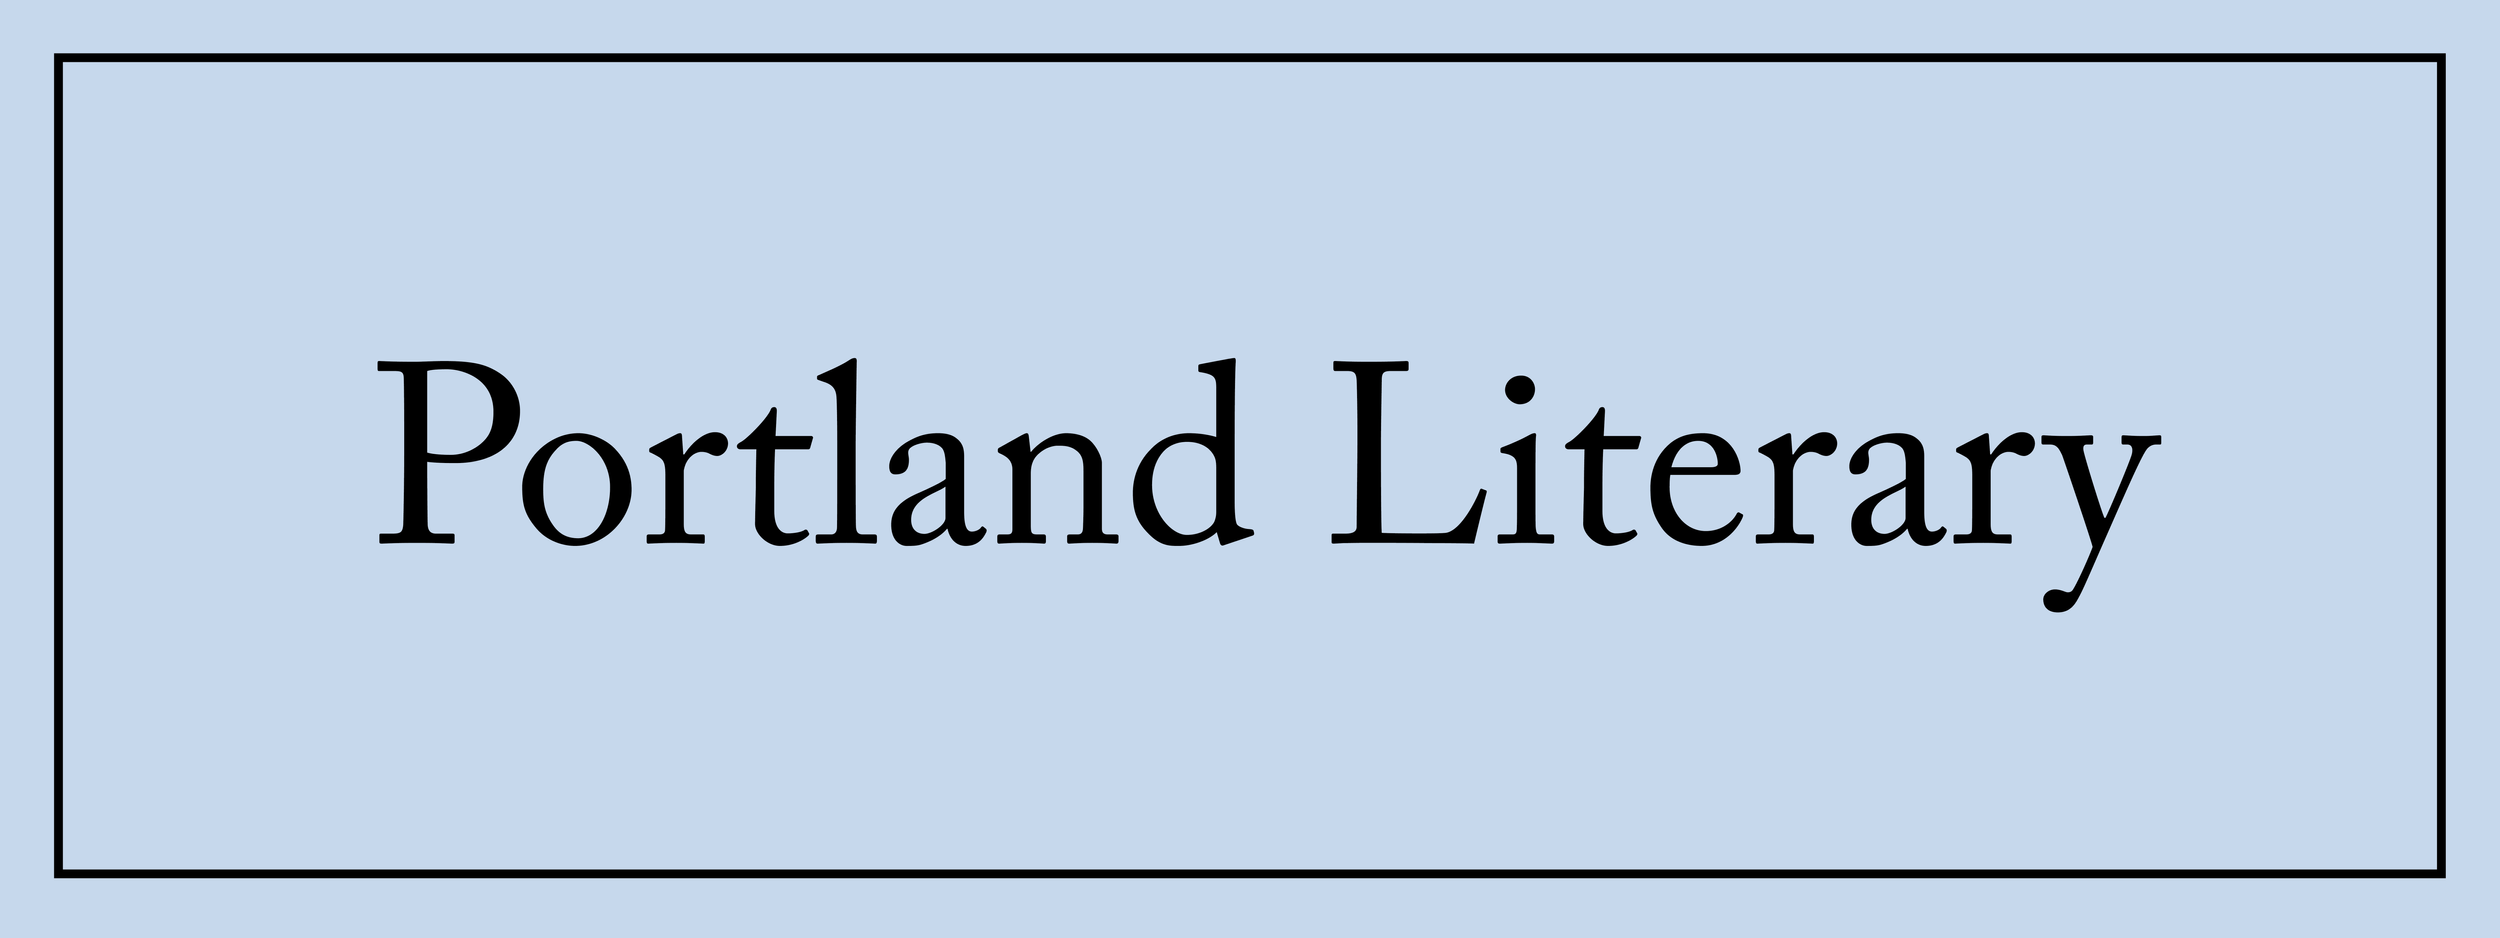 Portland Literay Logos 5.png